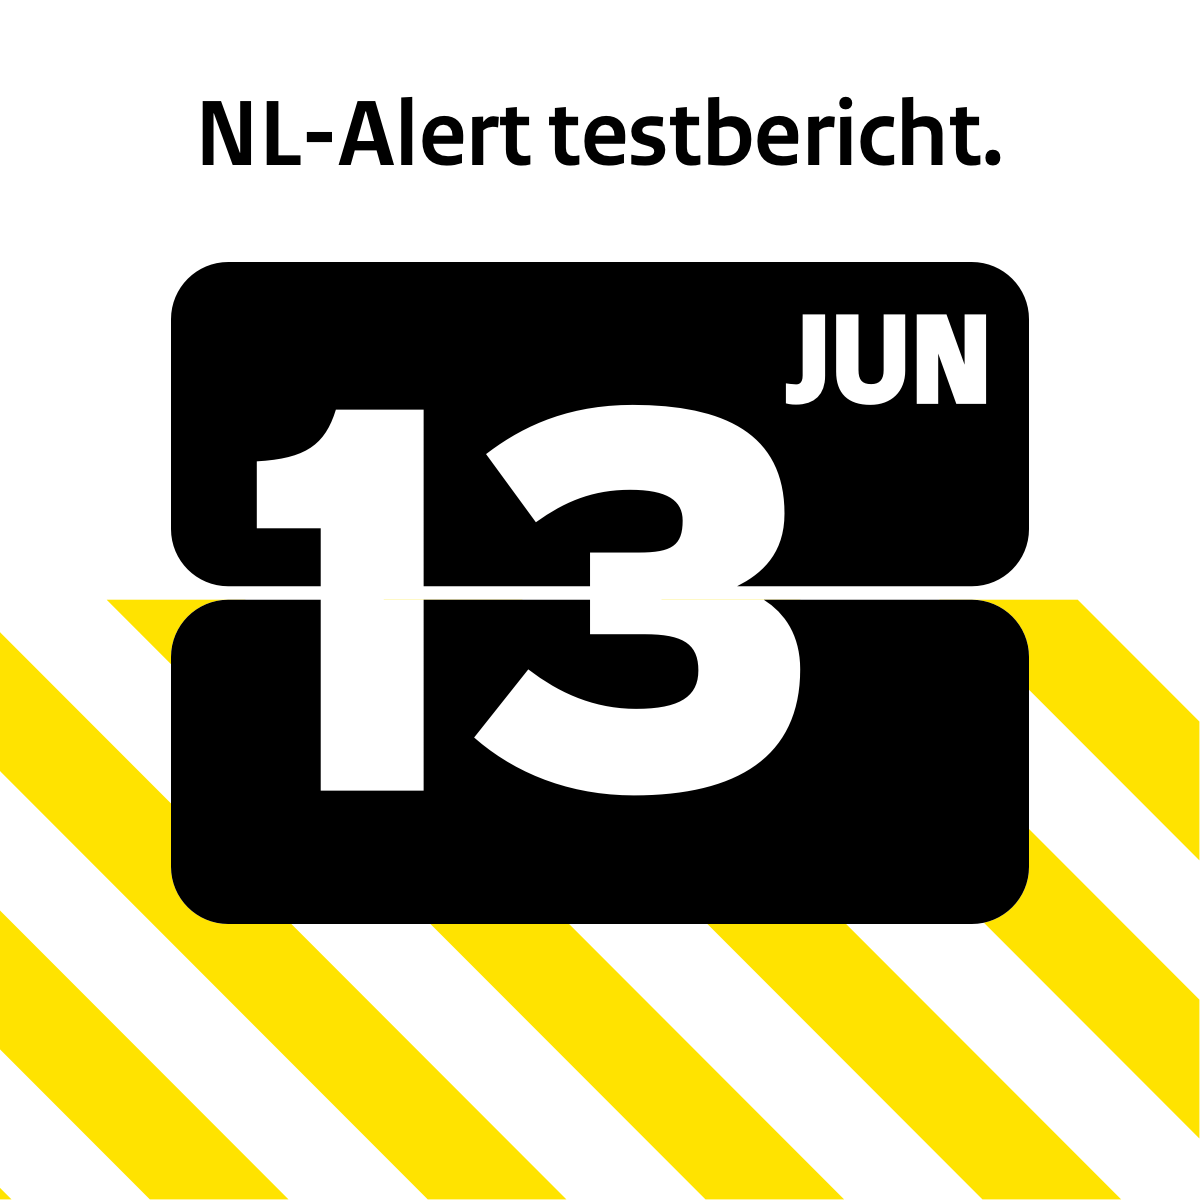 NL-Alert testbericht